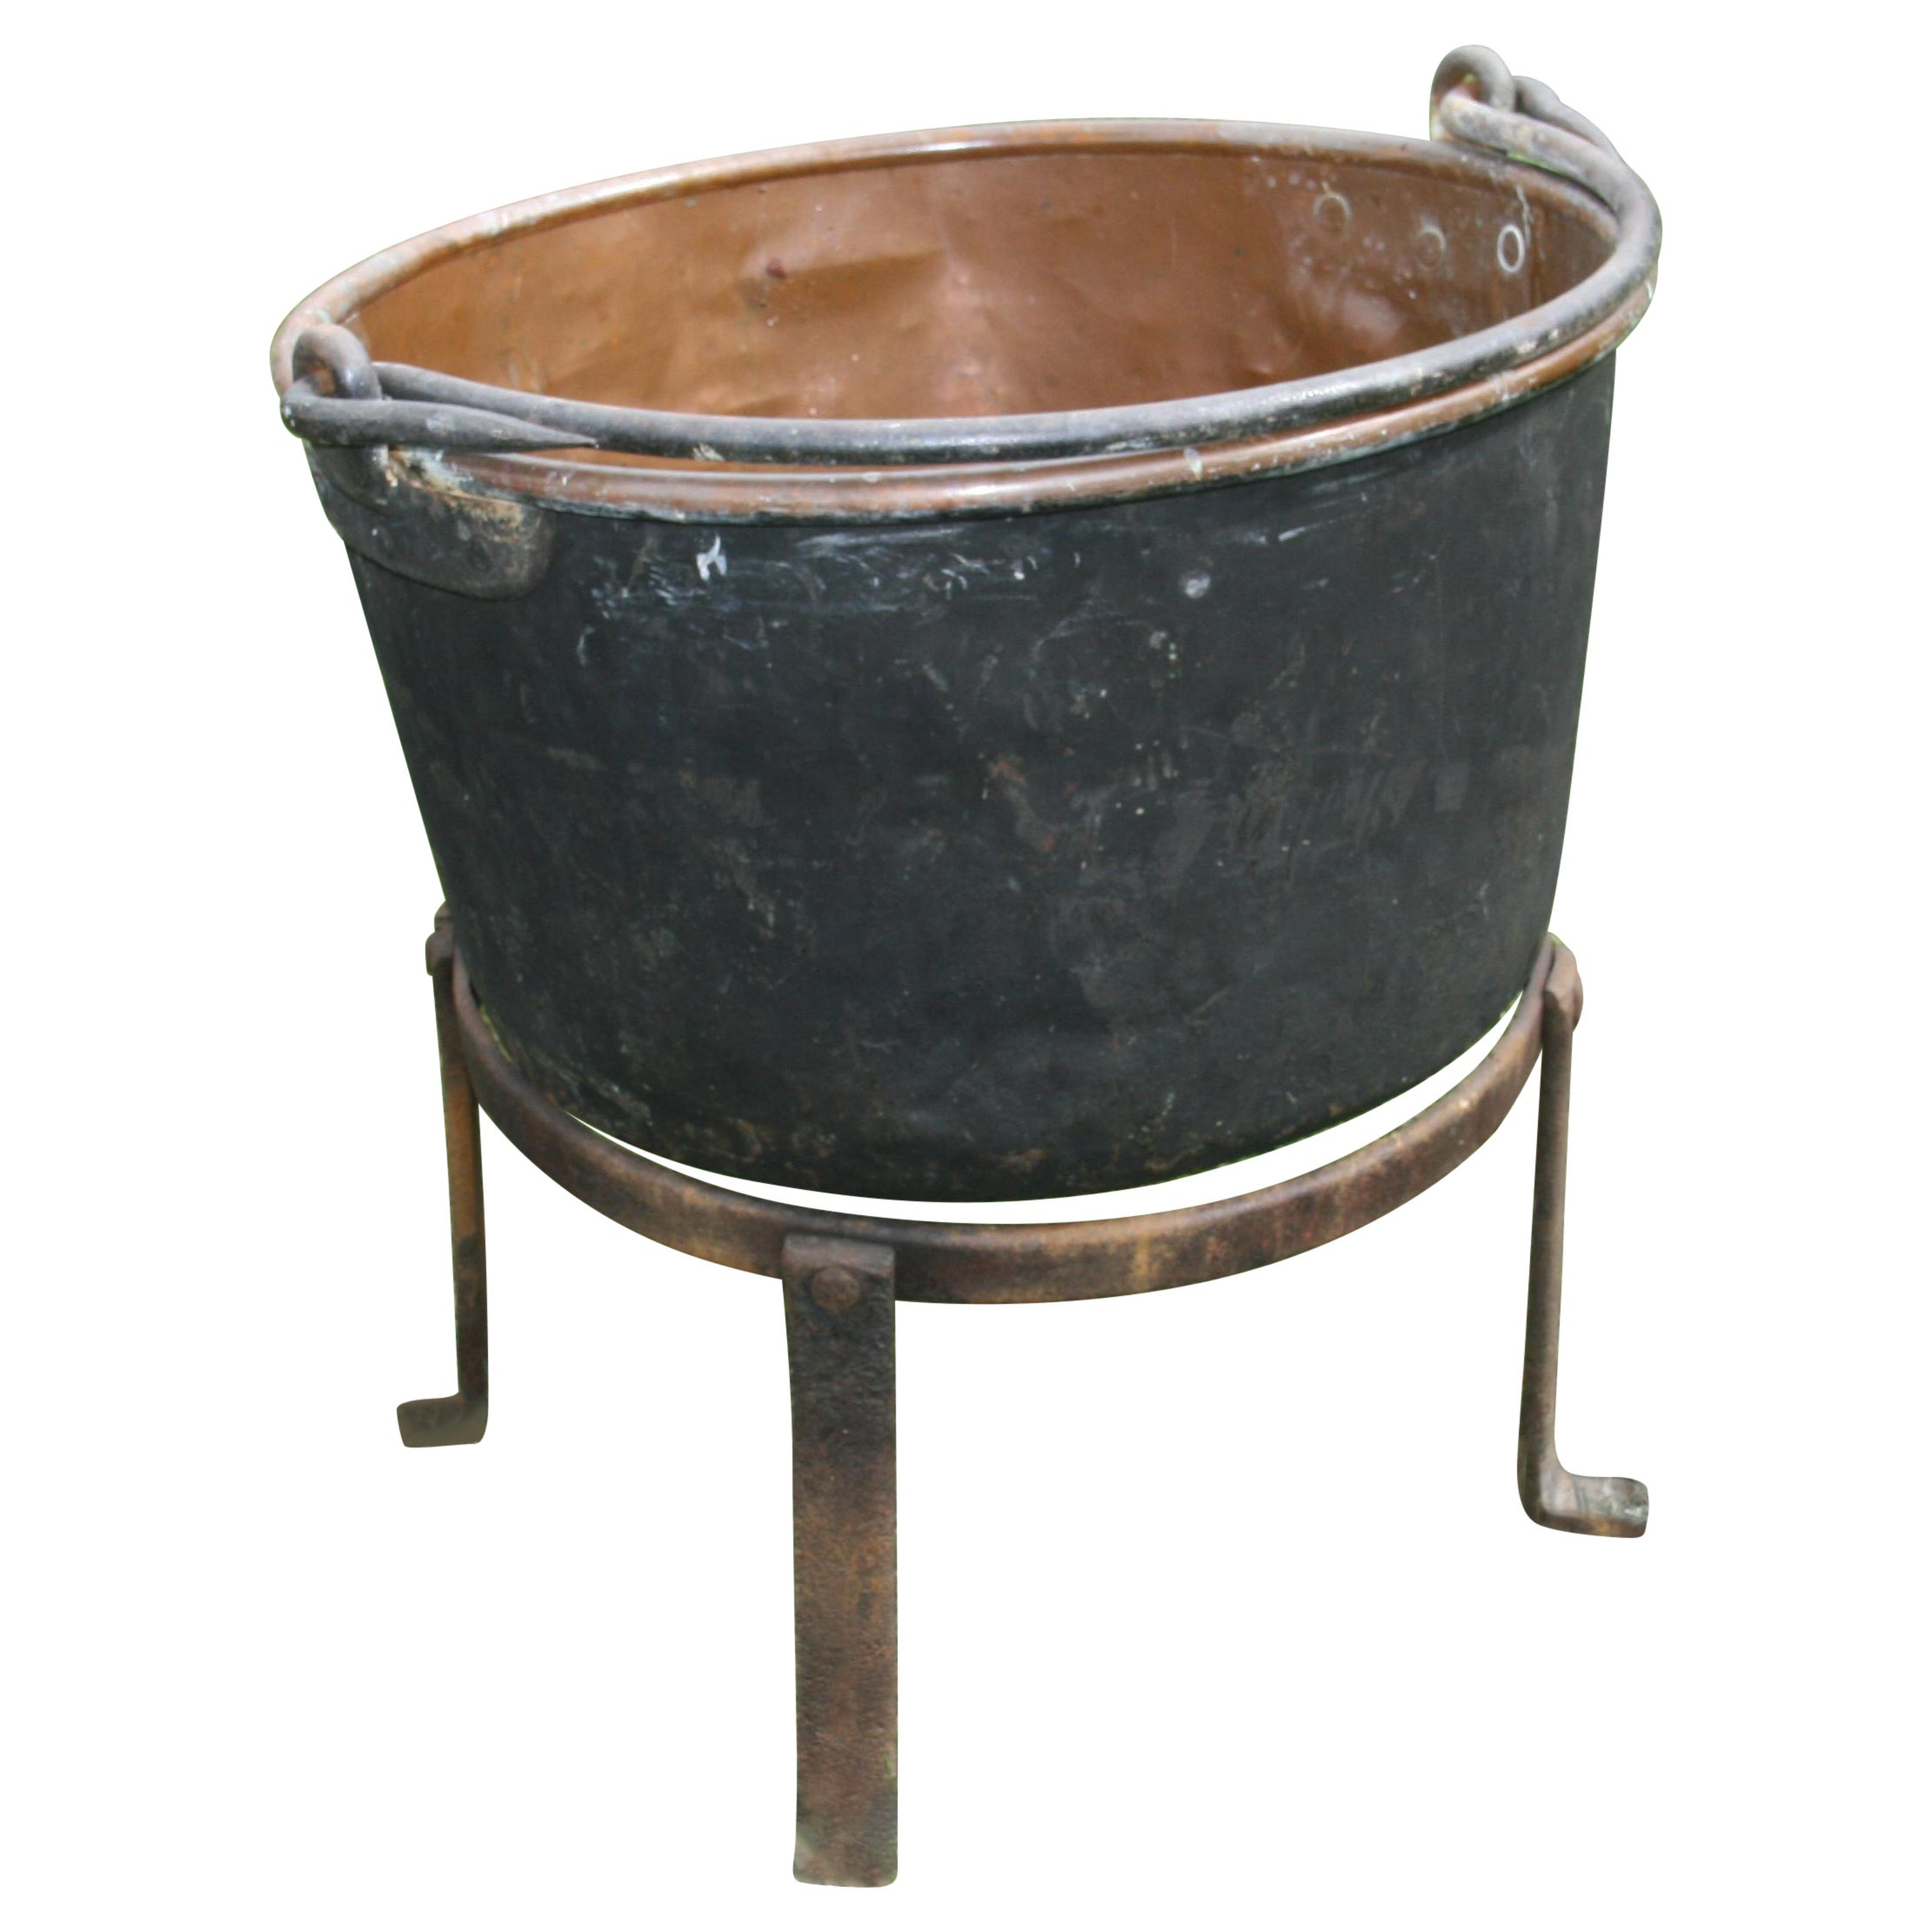 Großes Kupfer  Cauldron-Topf auf Eisensockel/Pflanzgefäß/Log Bin aus dem 19. Jahrhundert im Angebot